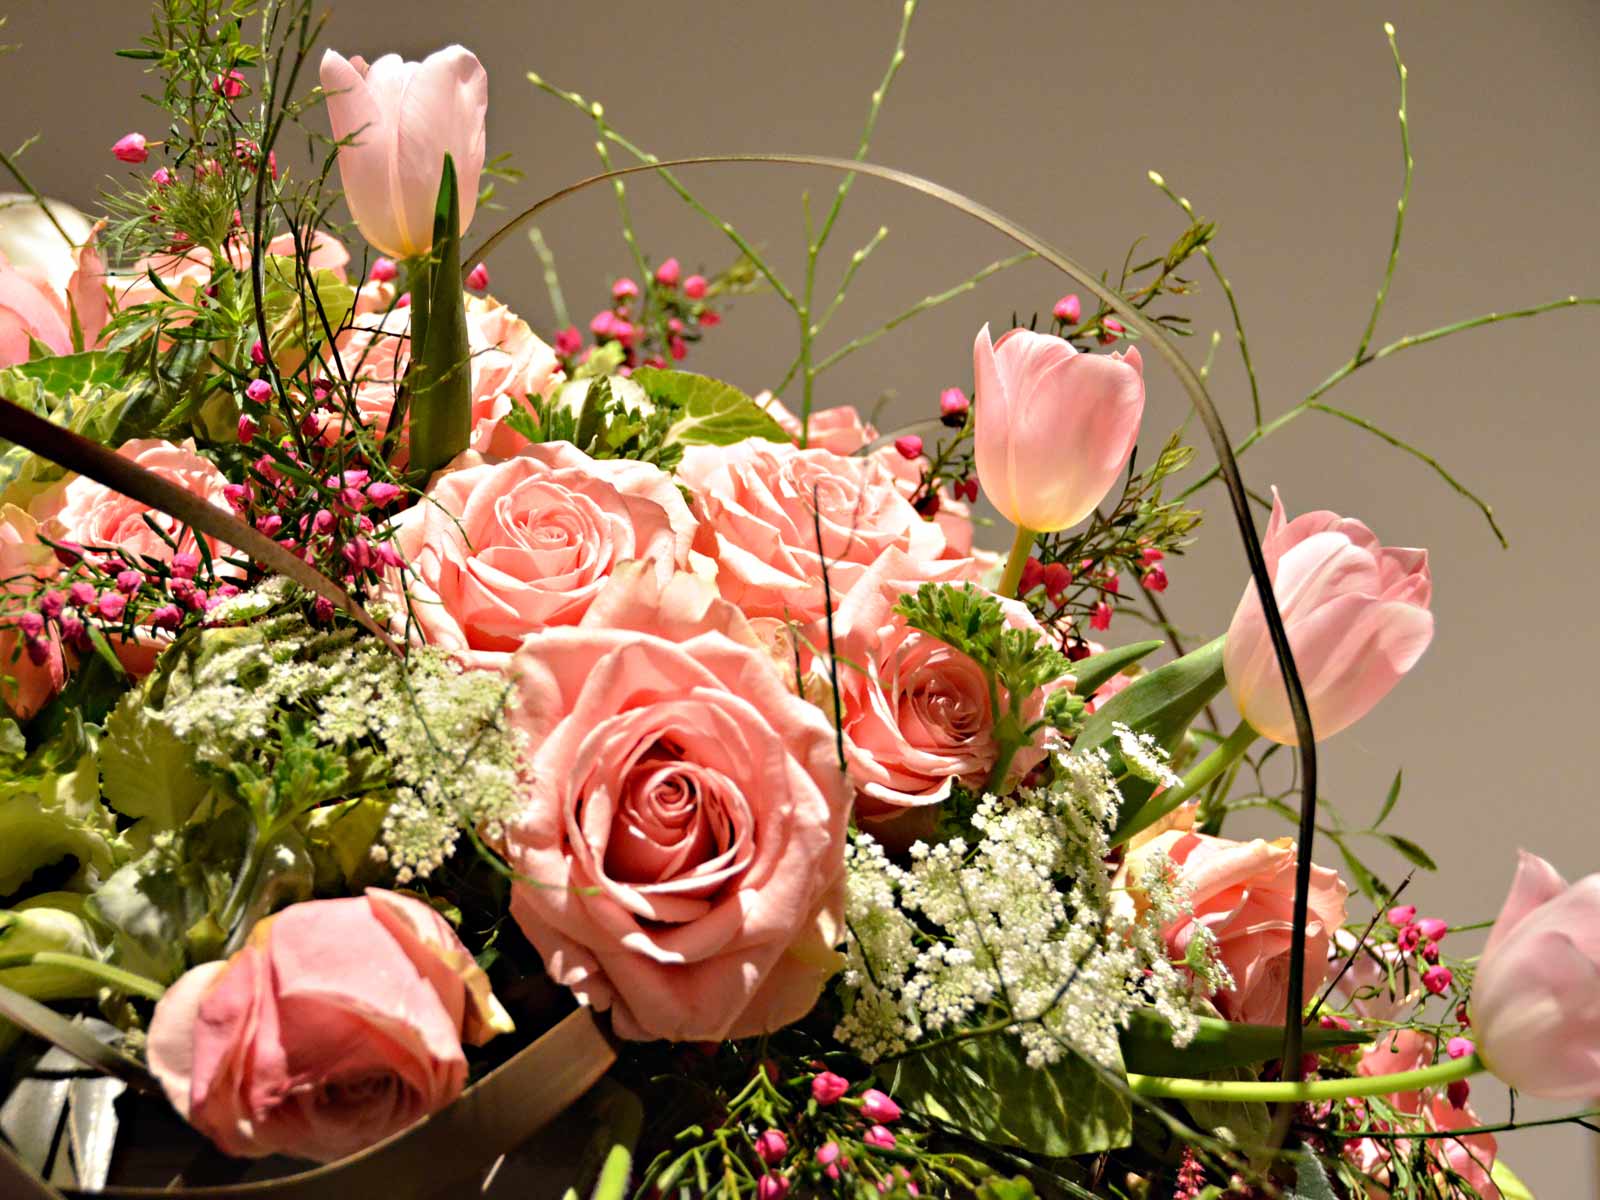 Milwaukee Art Museum Art in Bloom flower arrangement